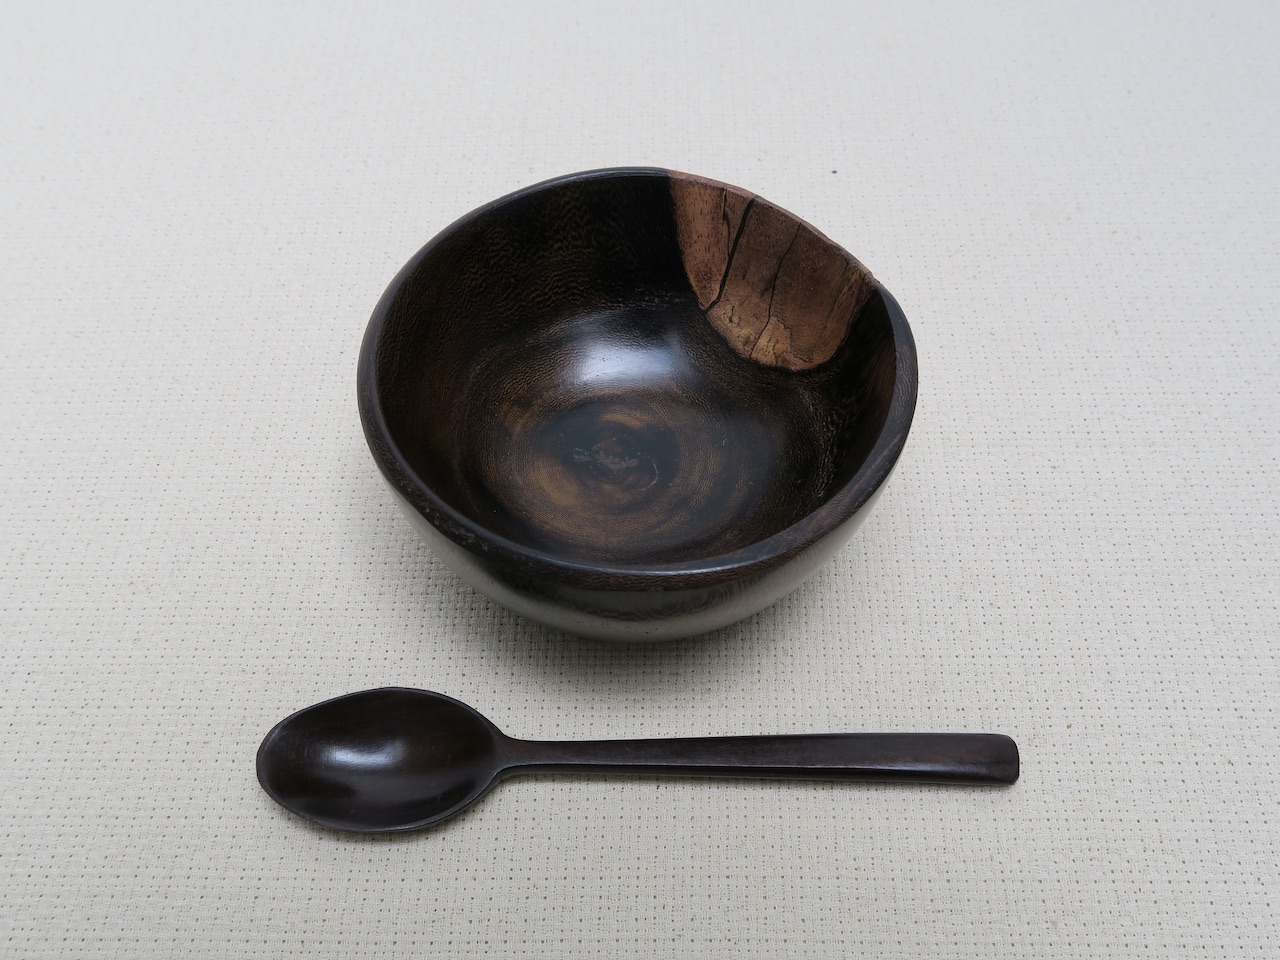 Ebony wood bowl and its spoon